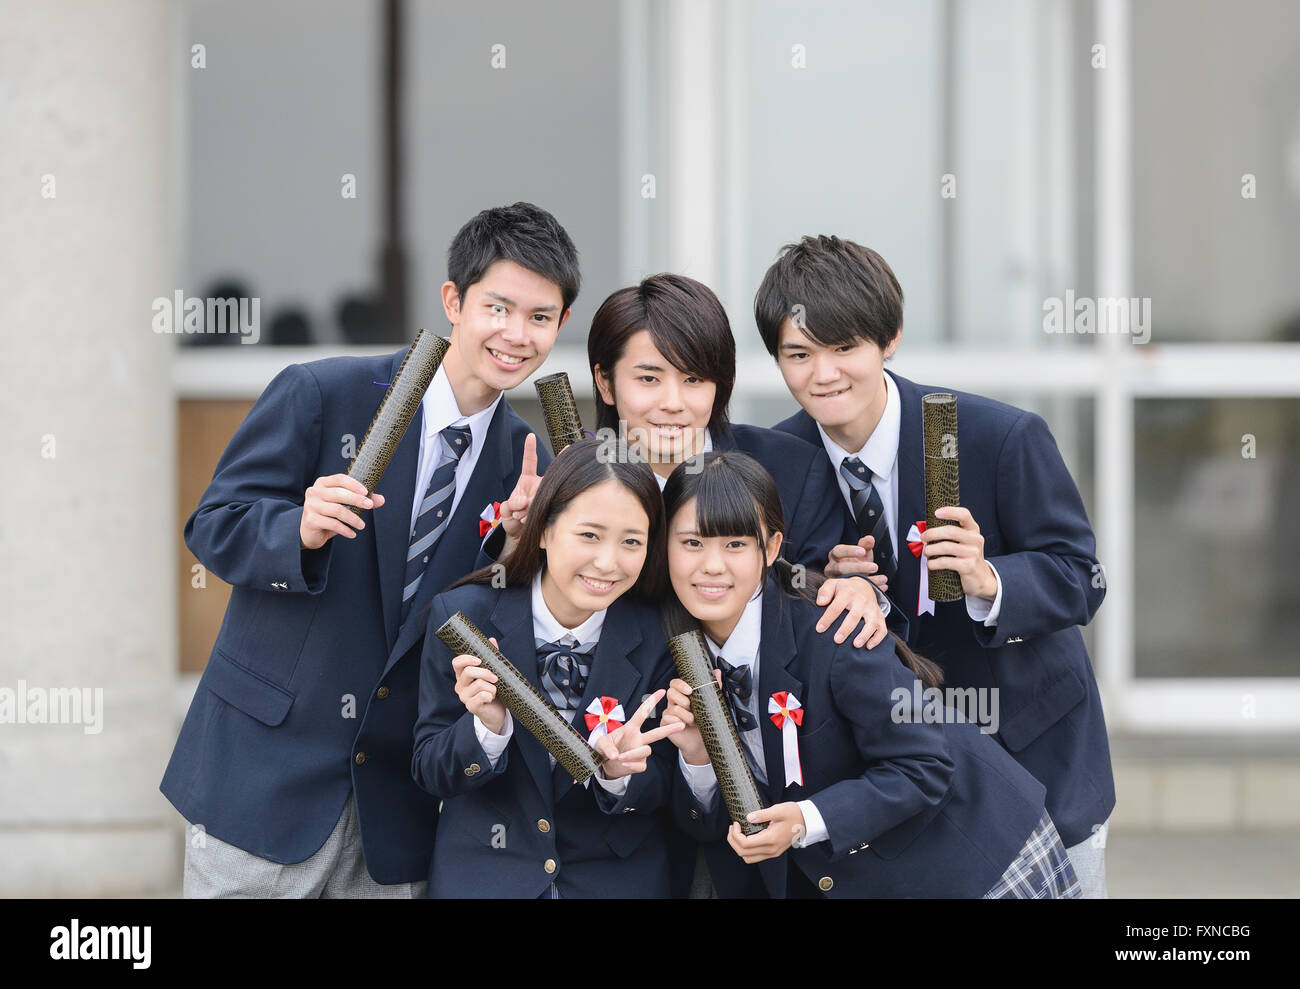 Japanese high school graduation ceremony Stock Photo